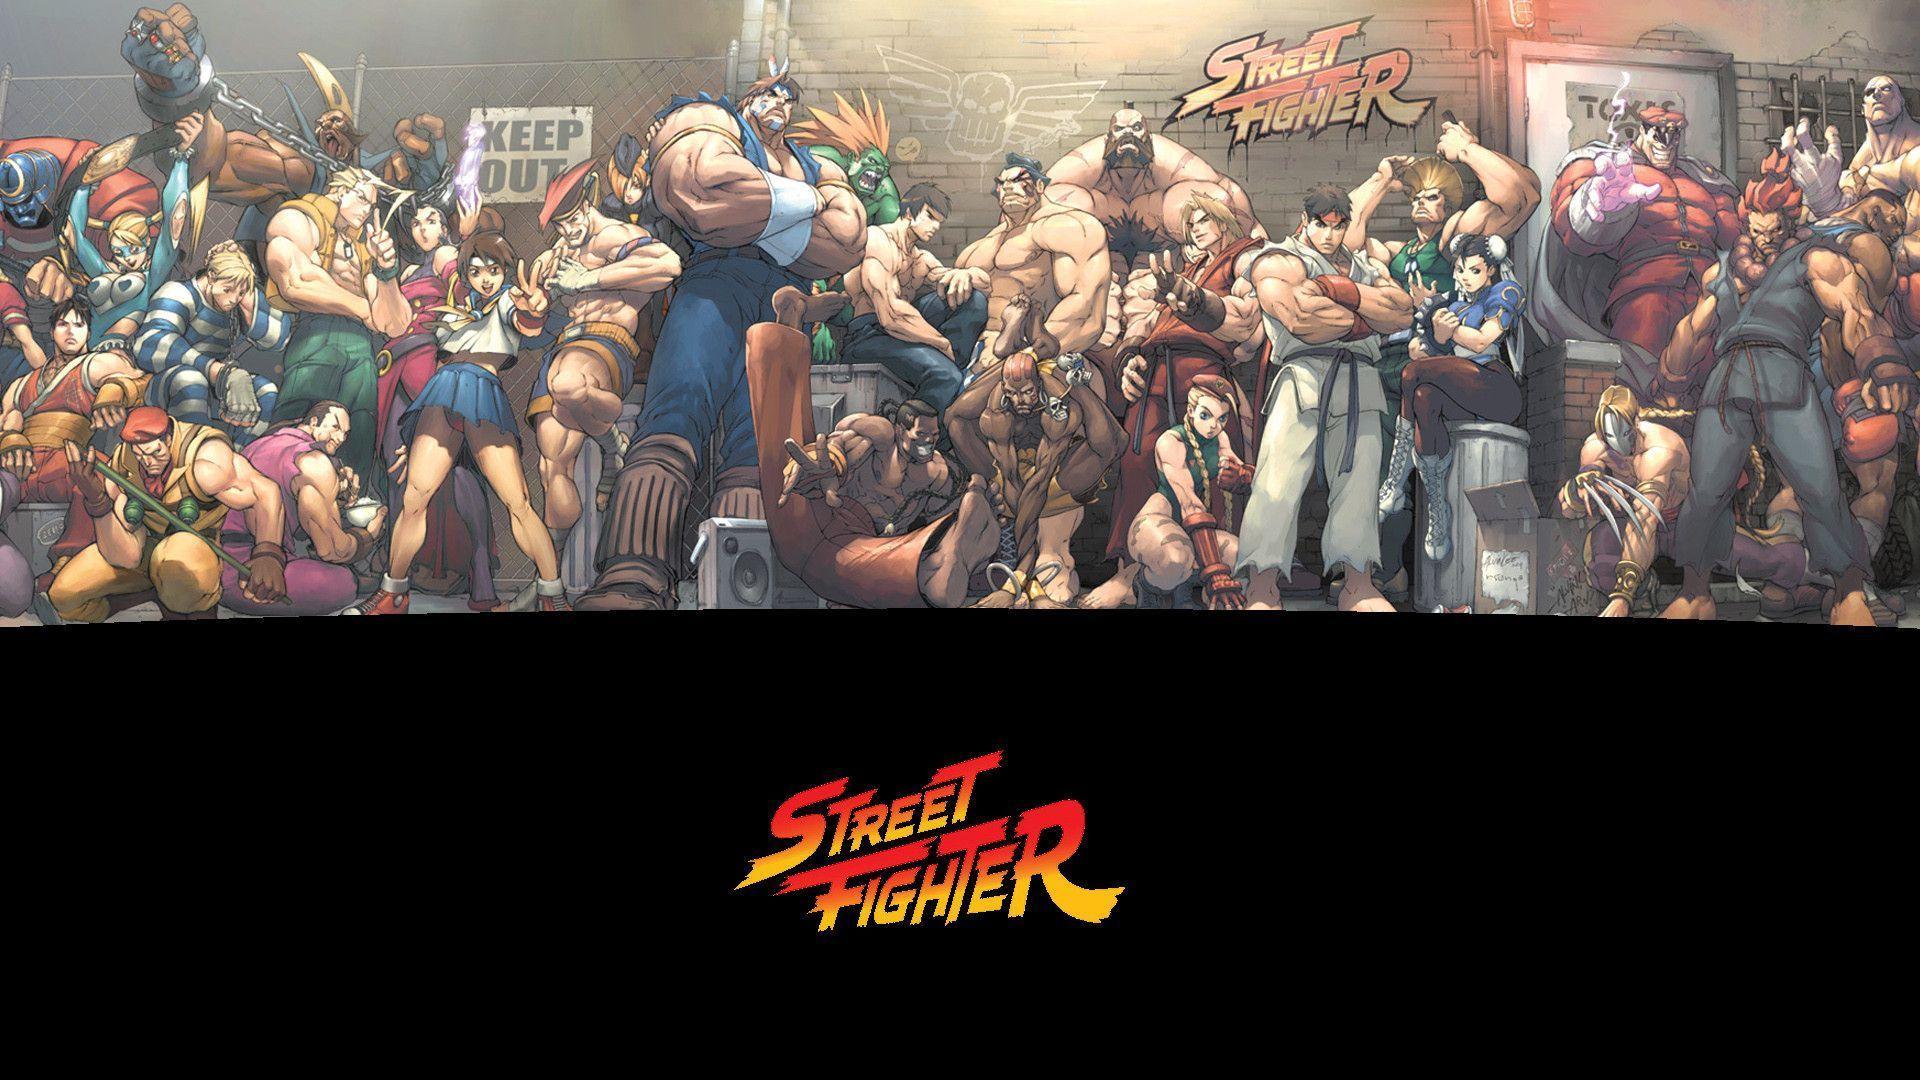 Street Fighter Computer Wallpapers, Desktop Backgrounds